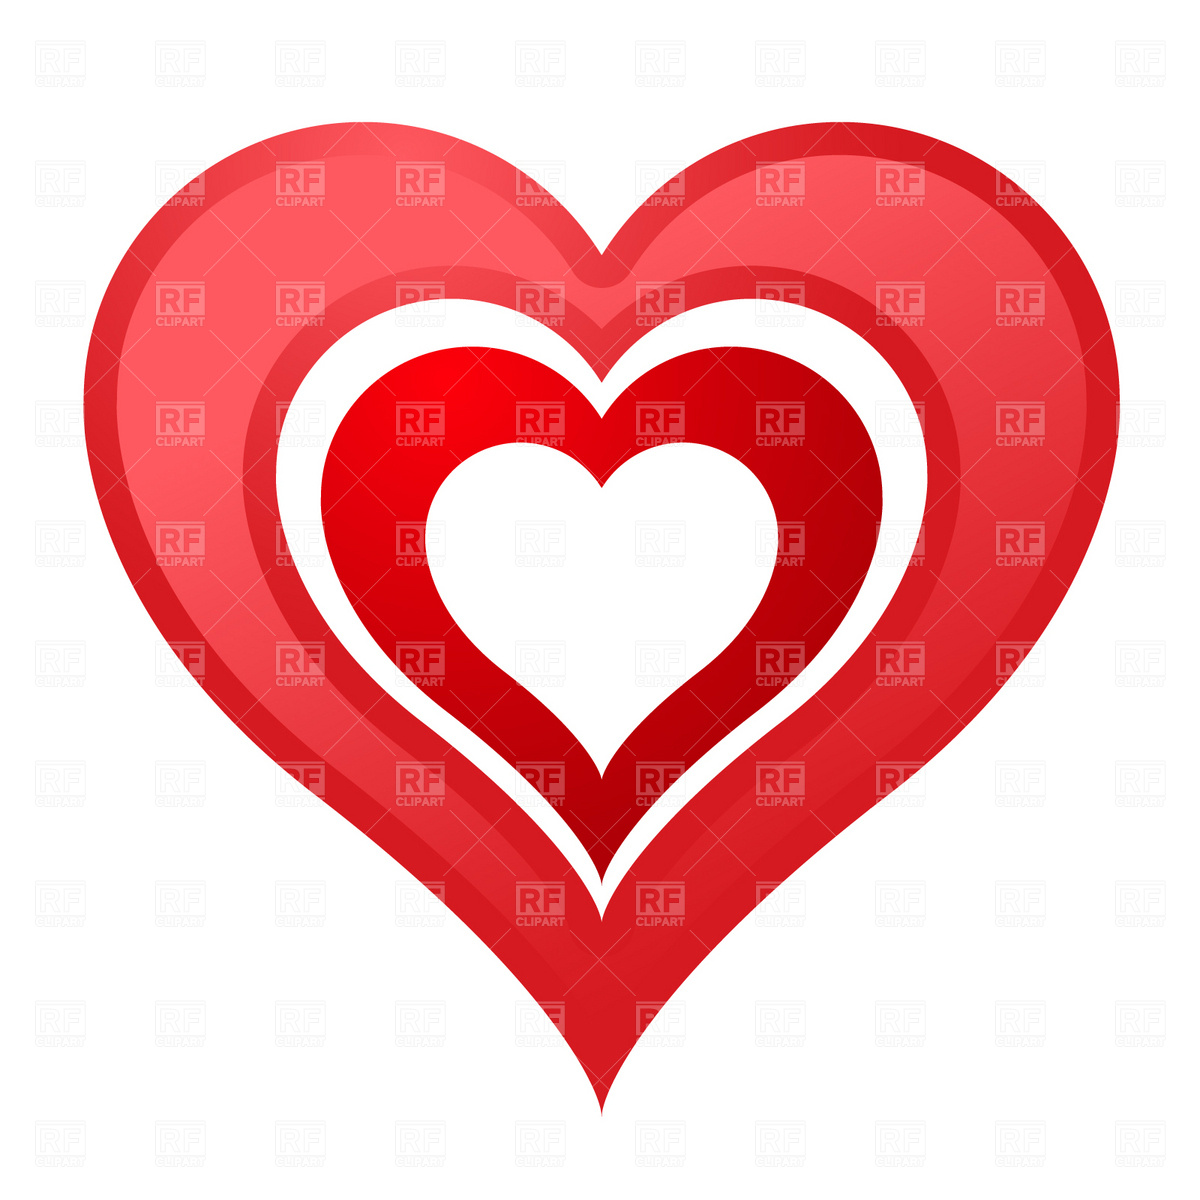 Heart, Signs, Symbols, Maps, download Royalty-free vector clip art